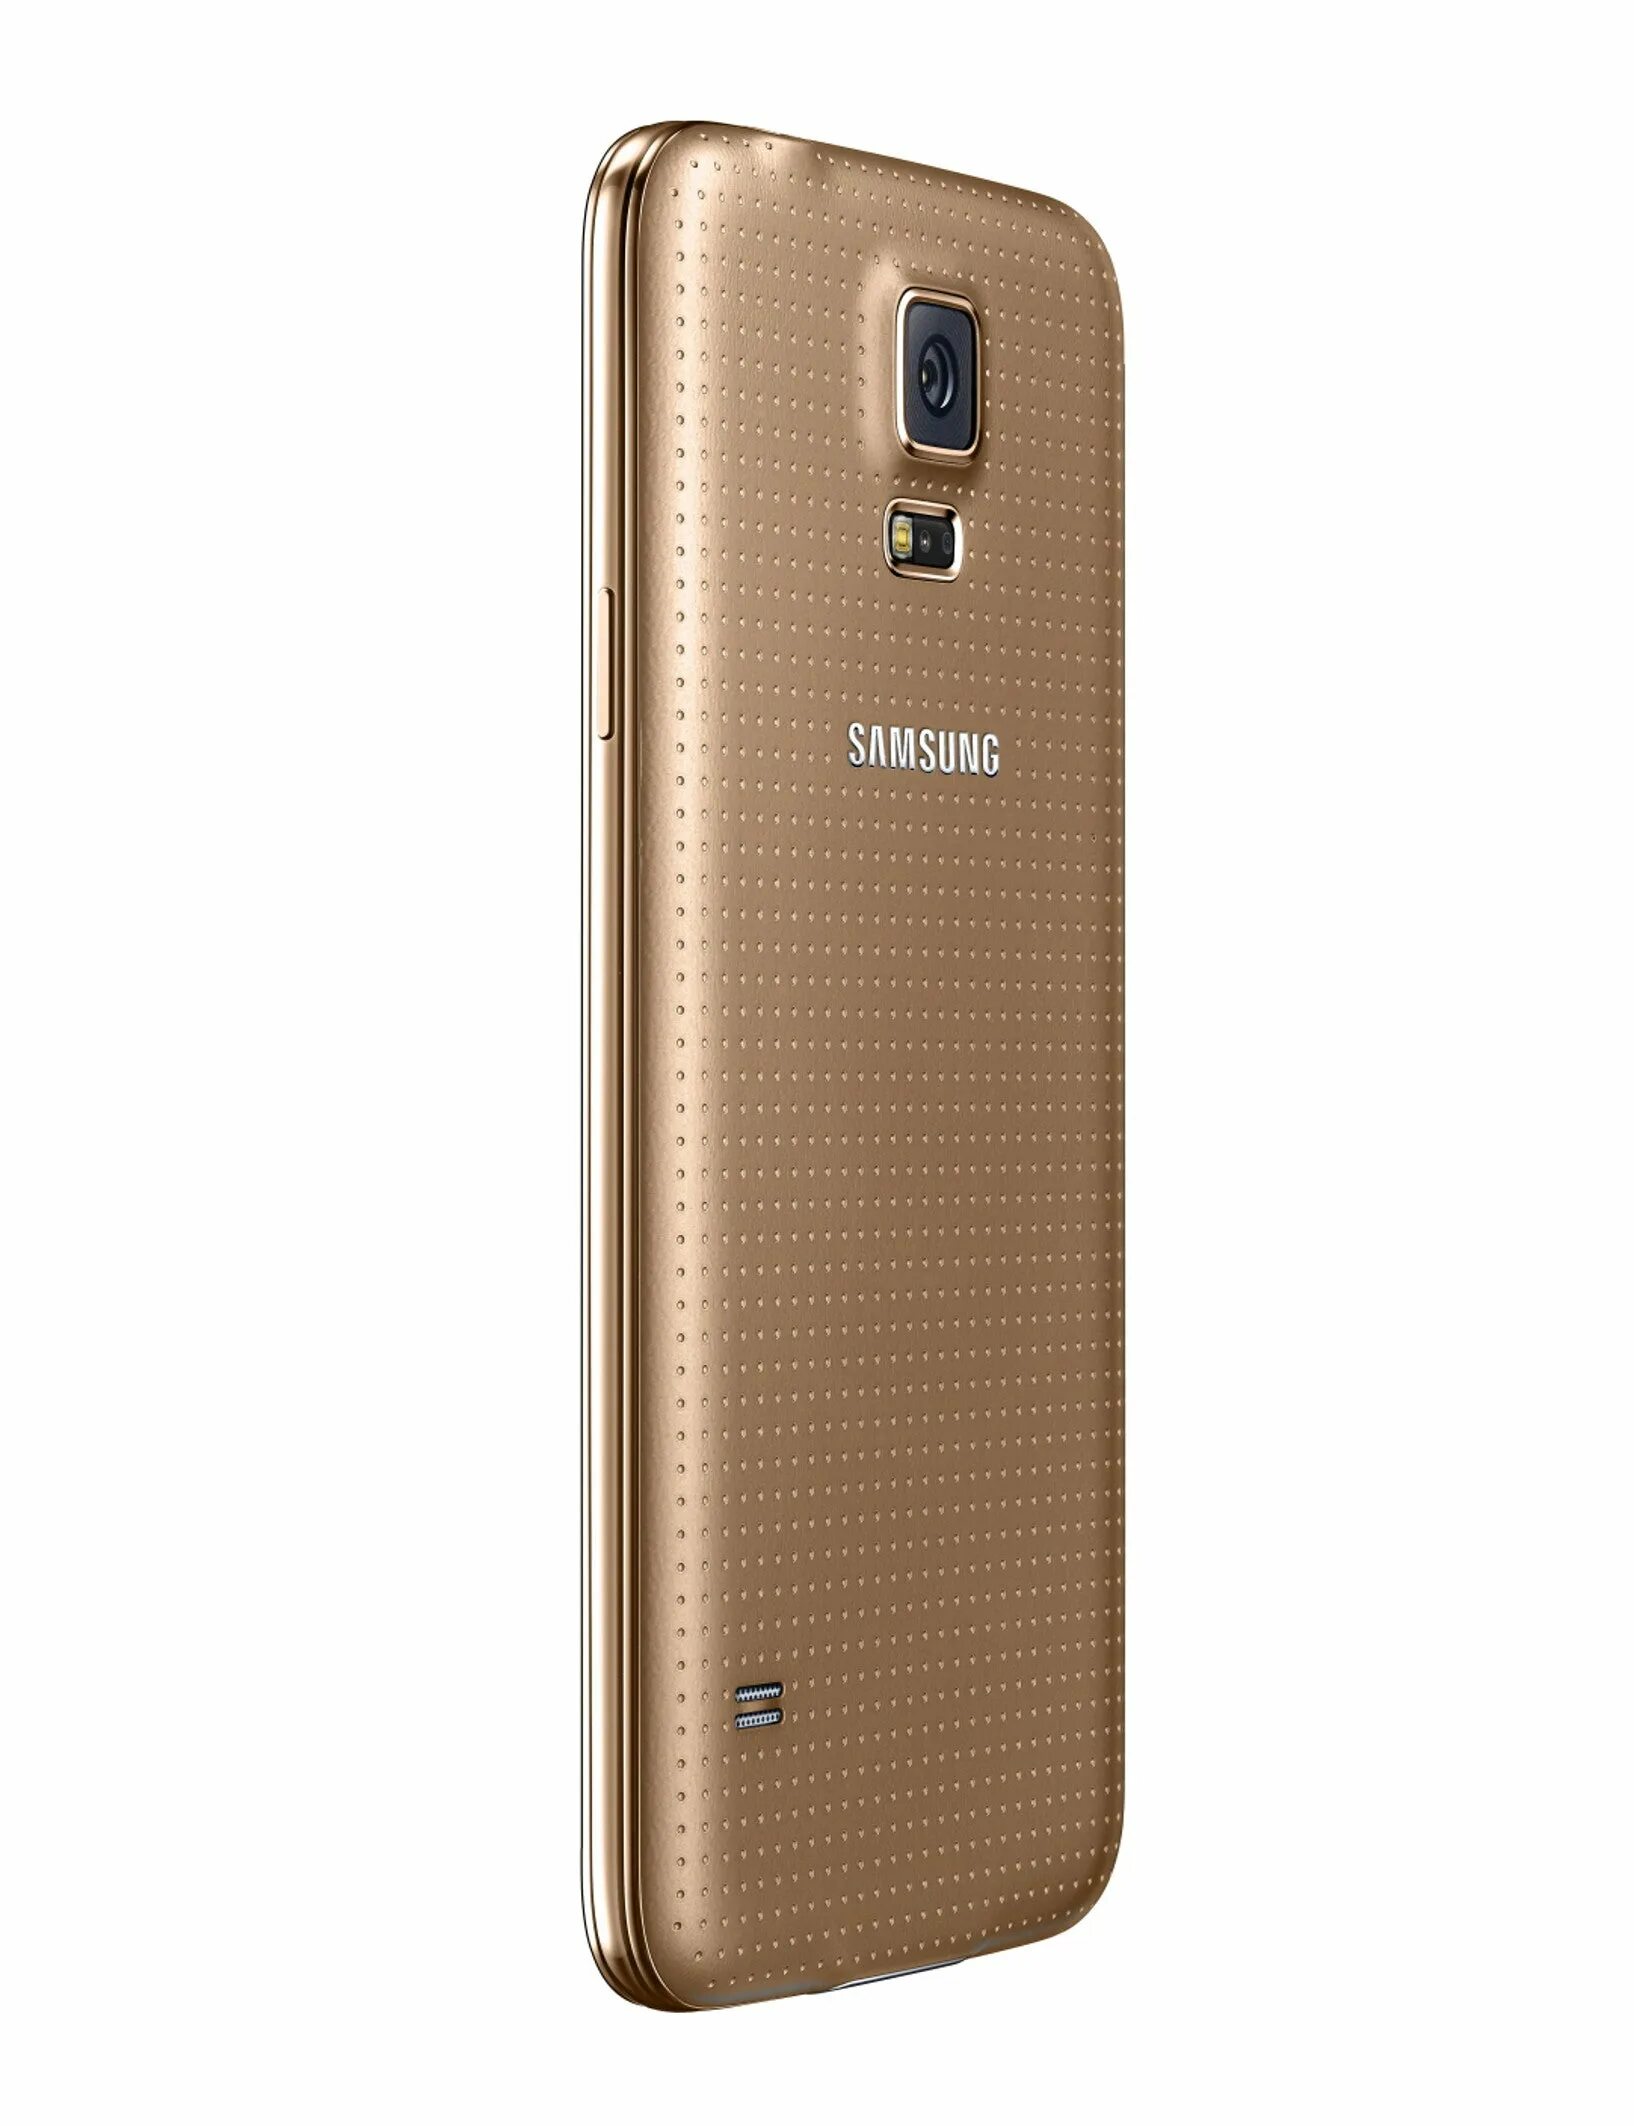 Samsung Galaxy s5 g900f. Самсунг SM g900f. Galaxy s5 SM-g900f. Samsung Galaxy s5 Duos SM-g900fd. Samsung galaxy s5 sm